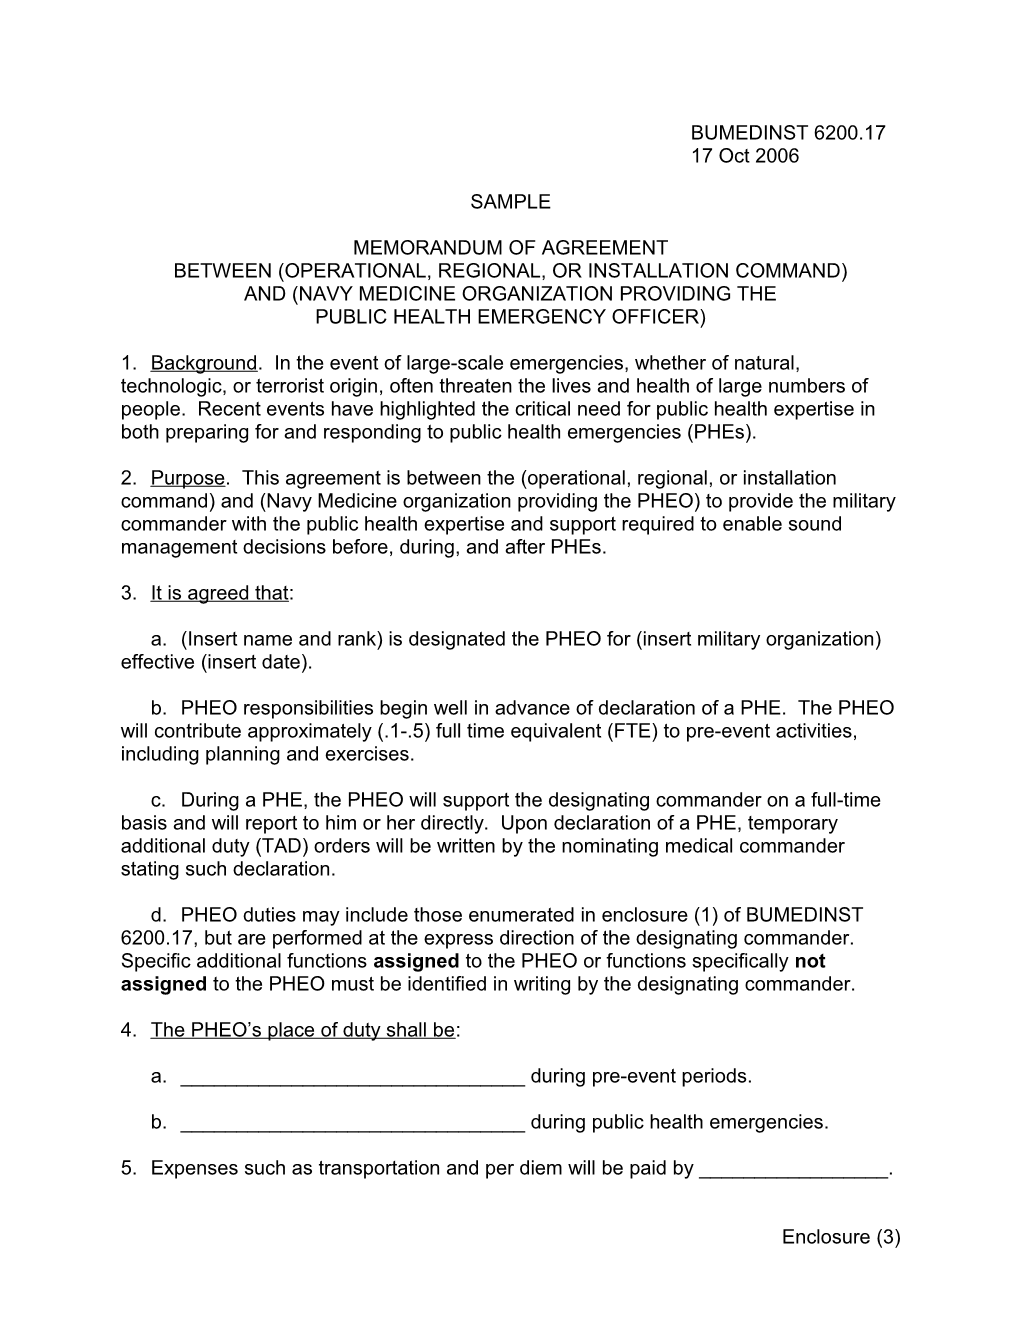 Sample Memorandum of Agreement Between (Operational, Regional, Or Installation Command)